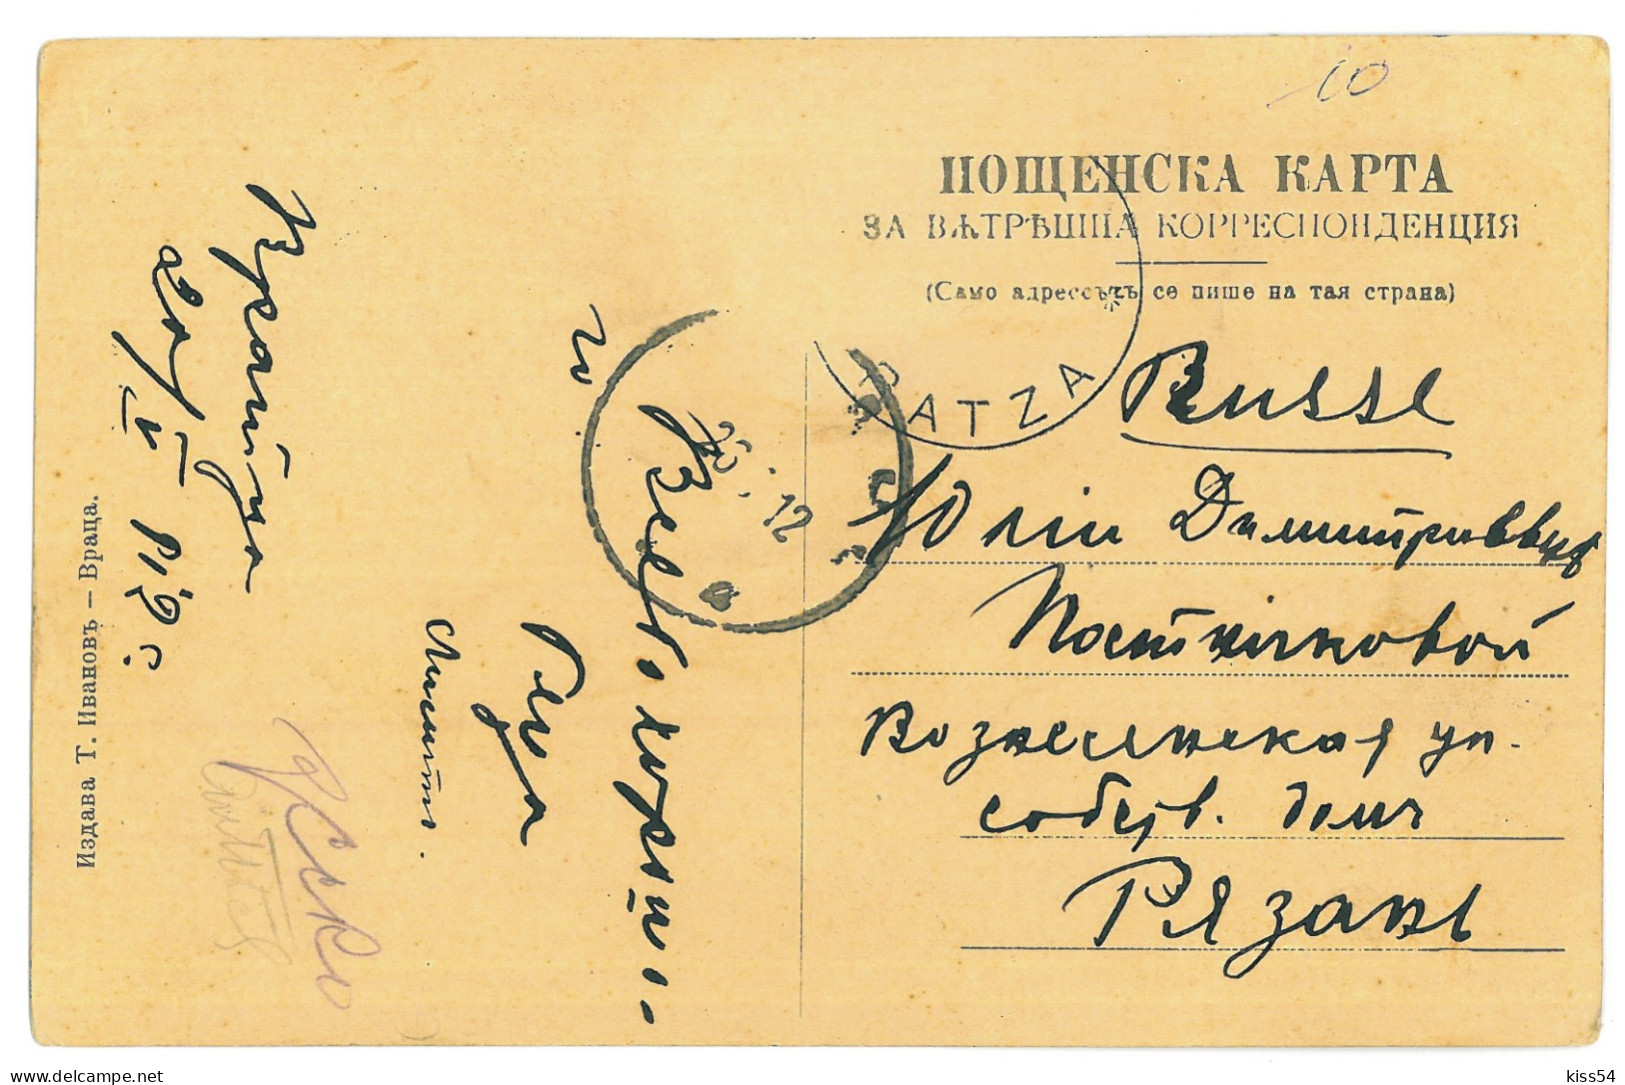 BUL 08 - 23478 VRATA PASS, Balkan Mountain, Bulgaria - Old Postcard - Used - 1912 - Bulgarien